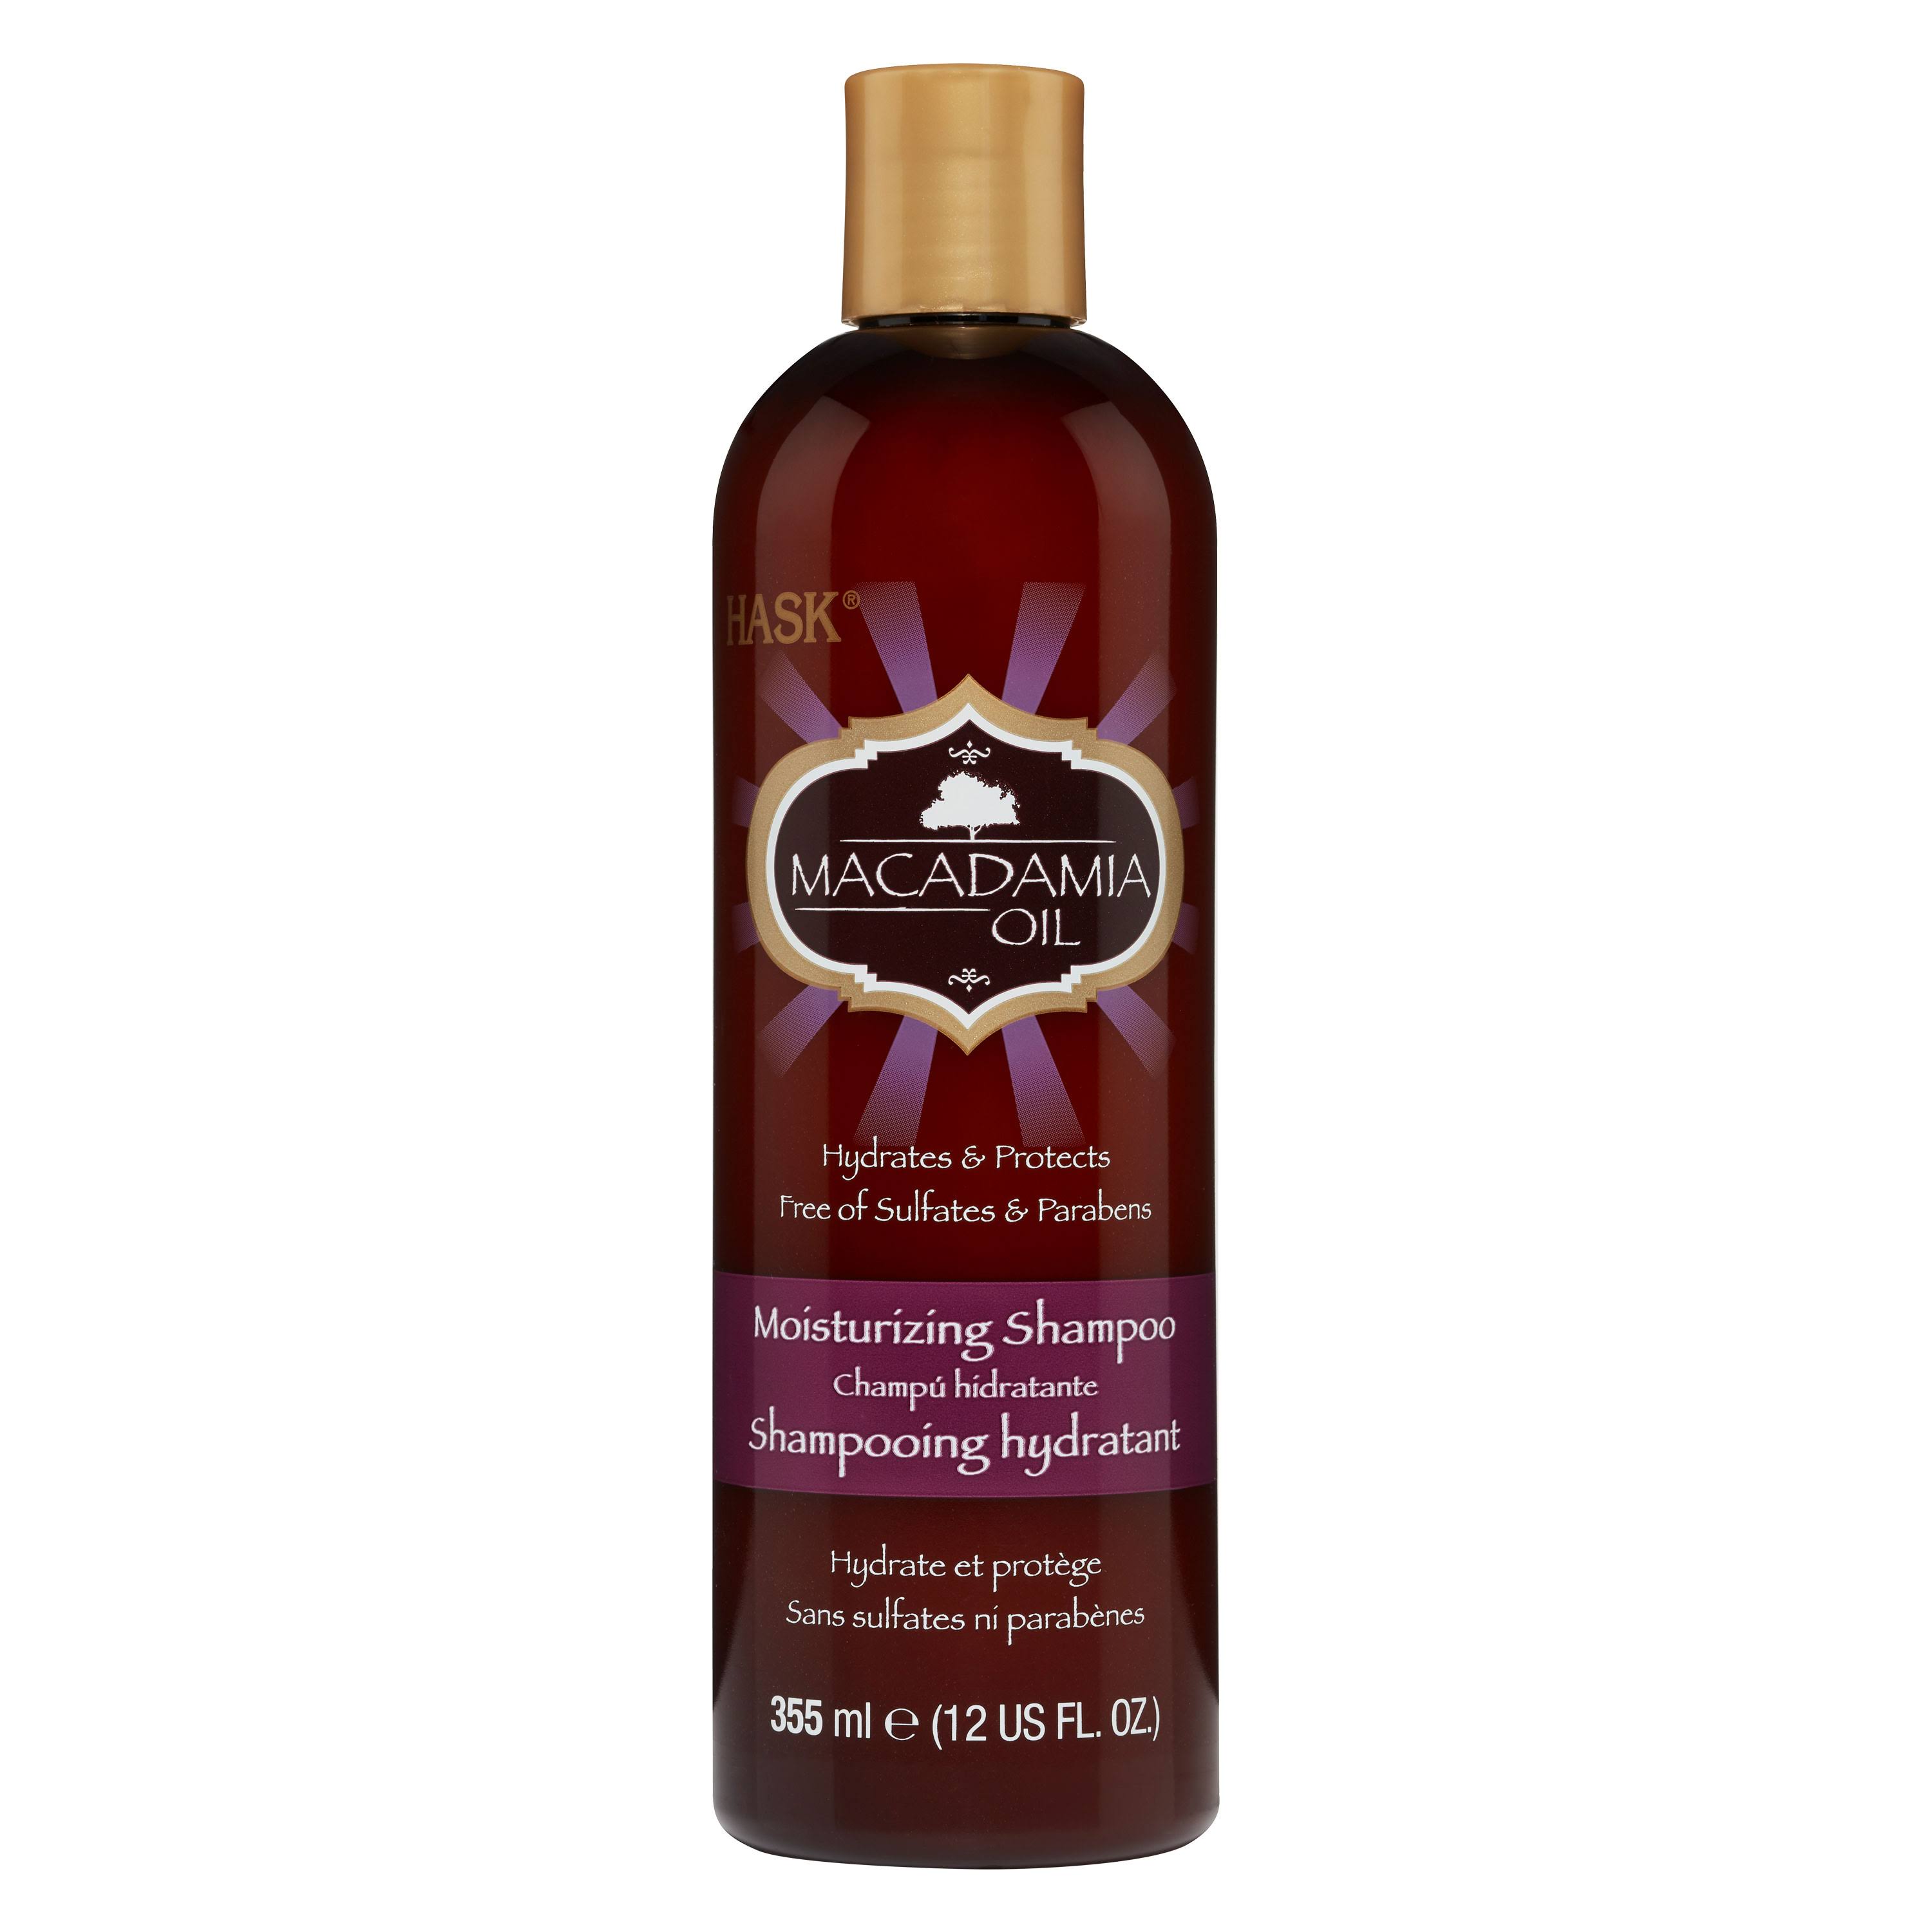 Hask Macadamia Oil Moisturizing Shampoo - 12 oz